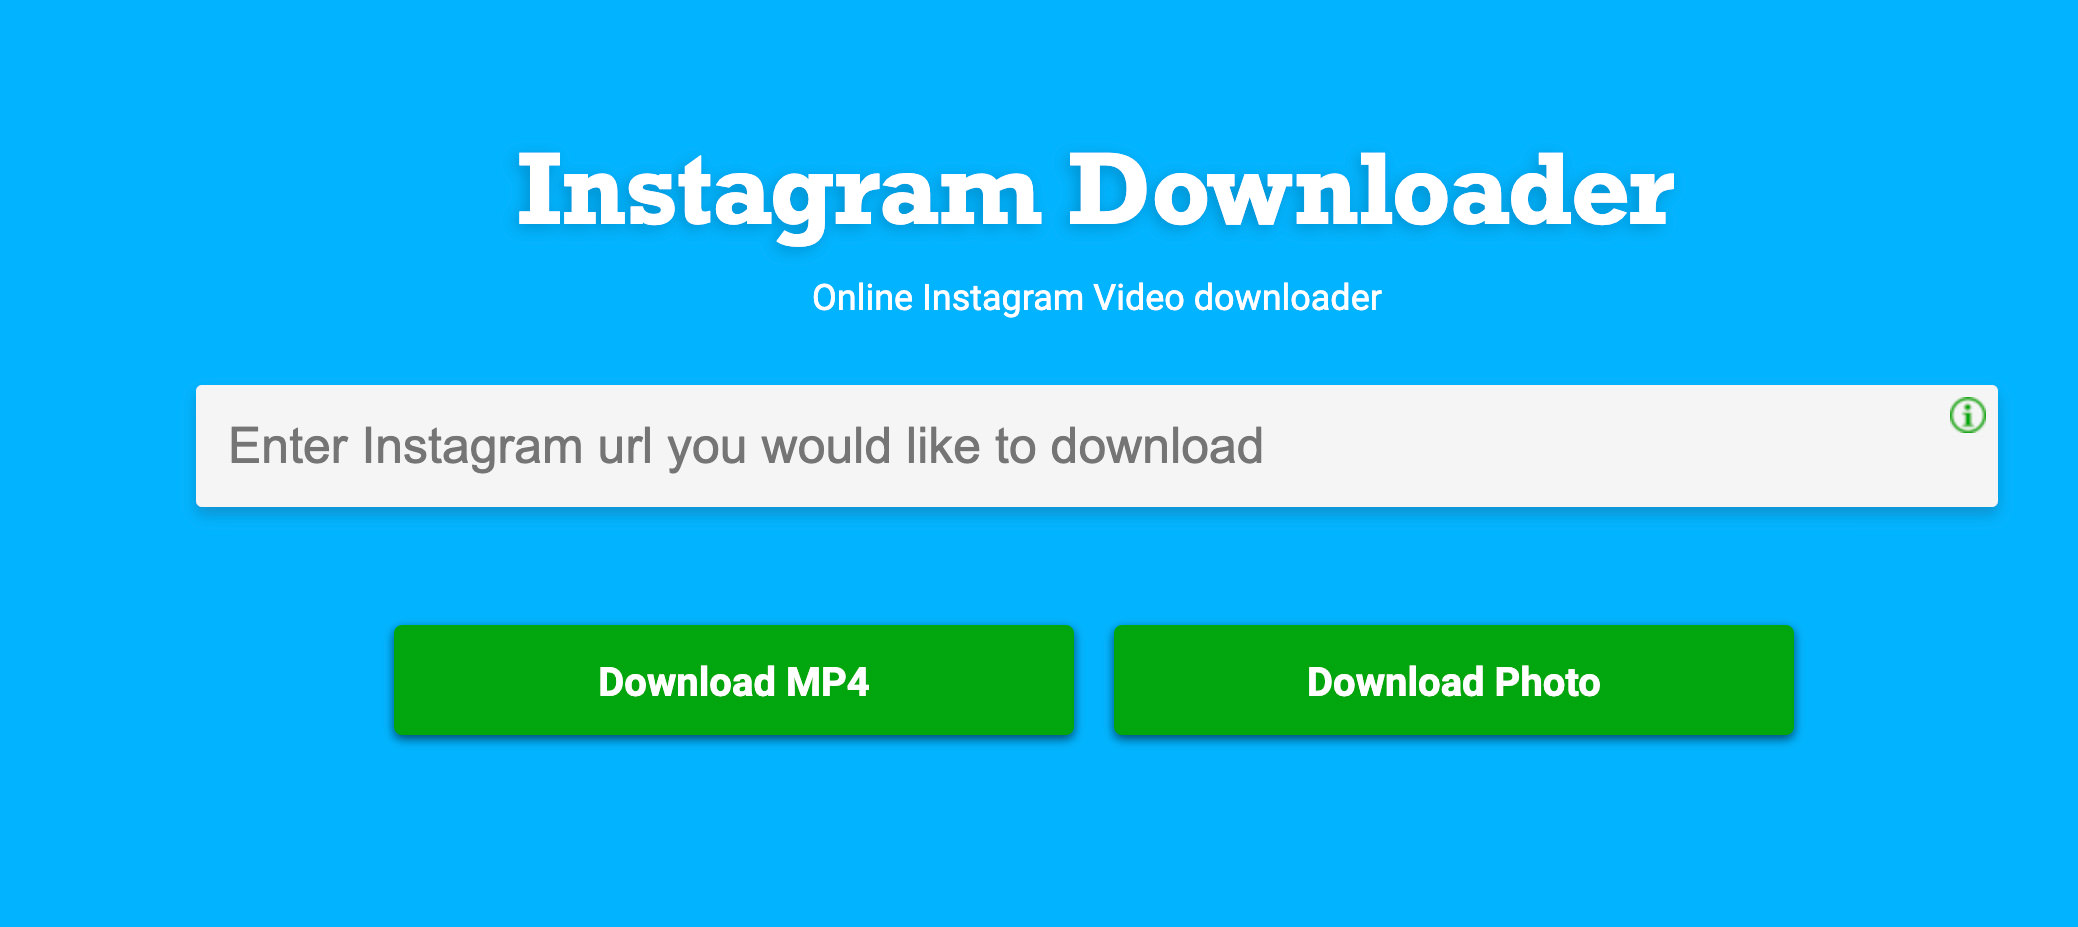 Online Tool for Downloading Instagram Videos